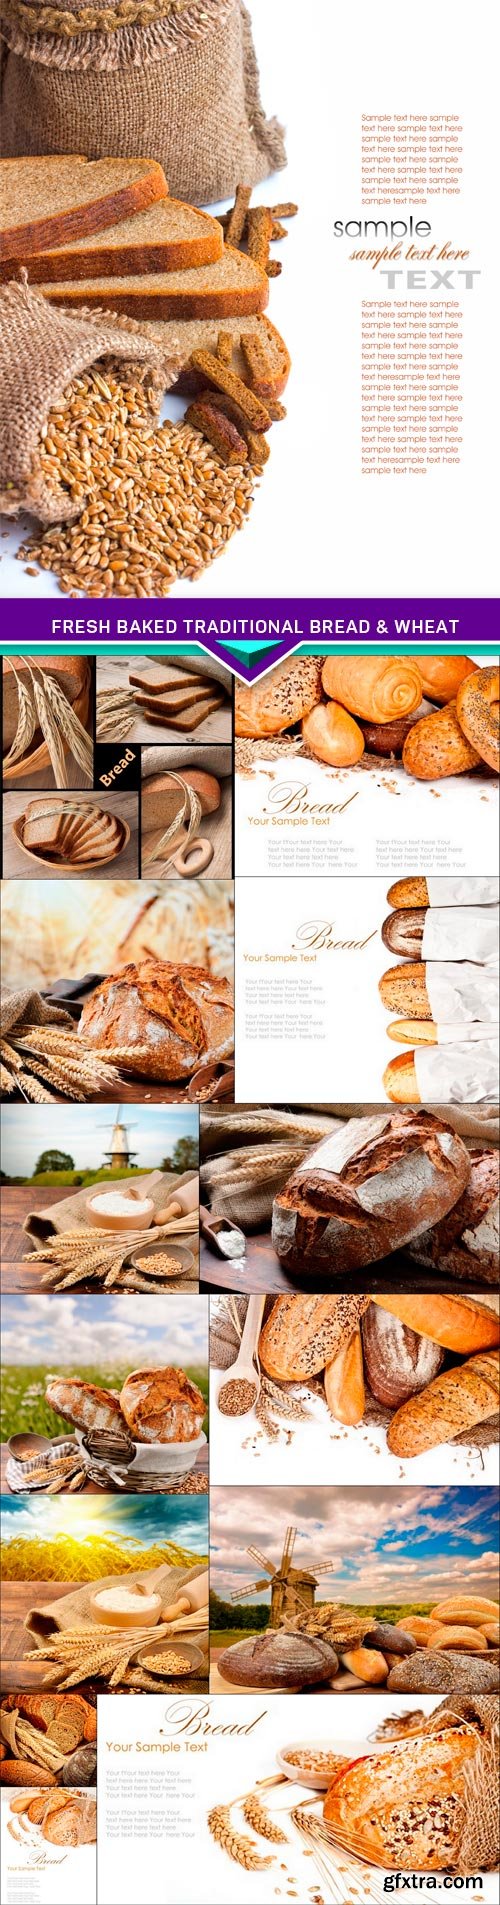 Fresh baked traditional bread & wheat 14x JPEG